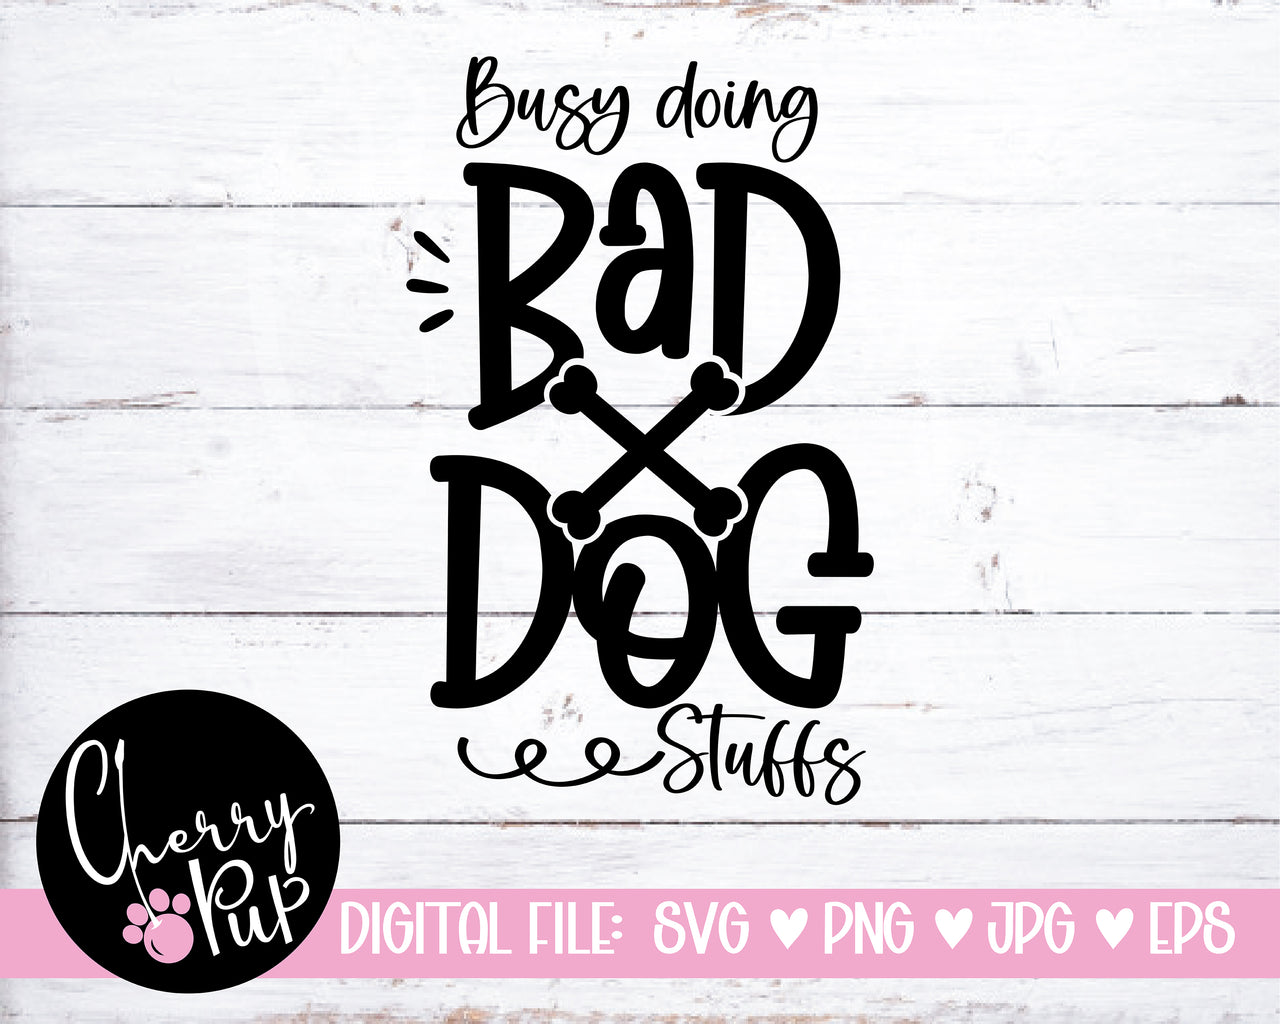 Busy Doing Bad Dog Stuffs SVG For Dog Bandana